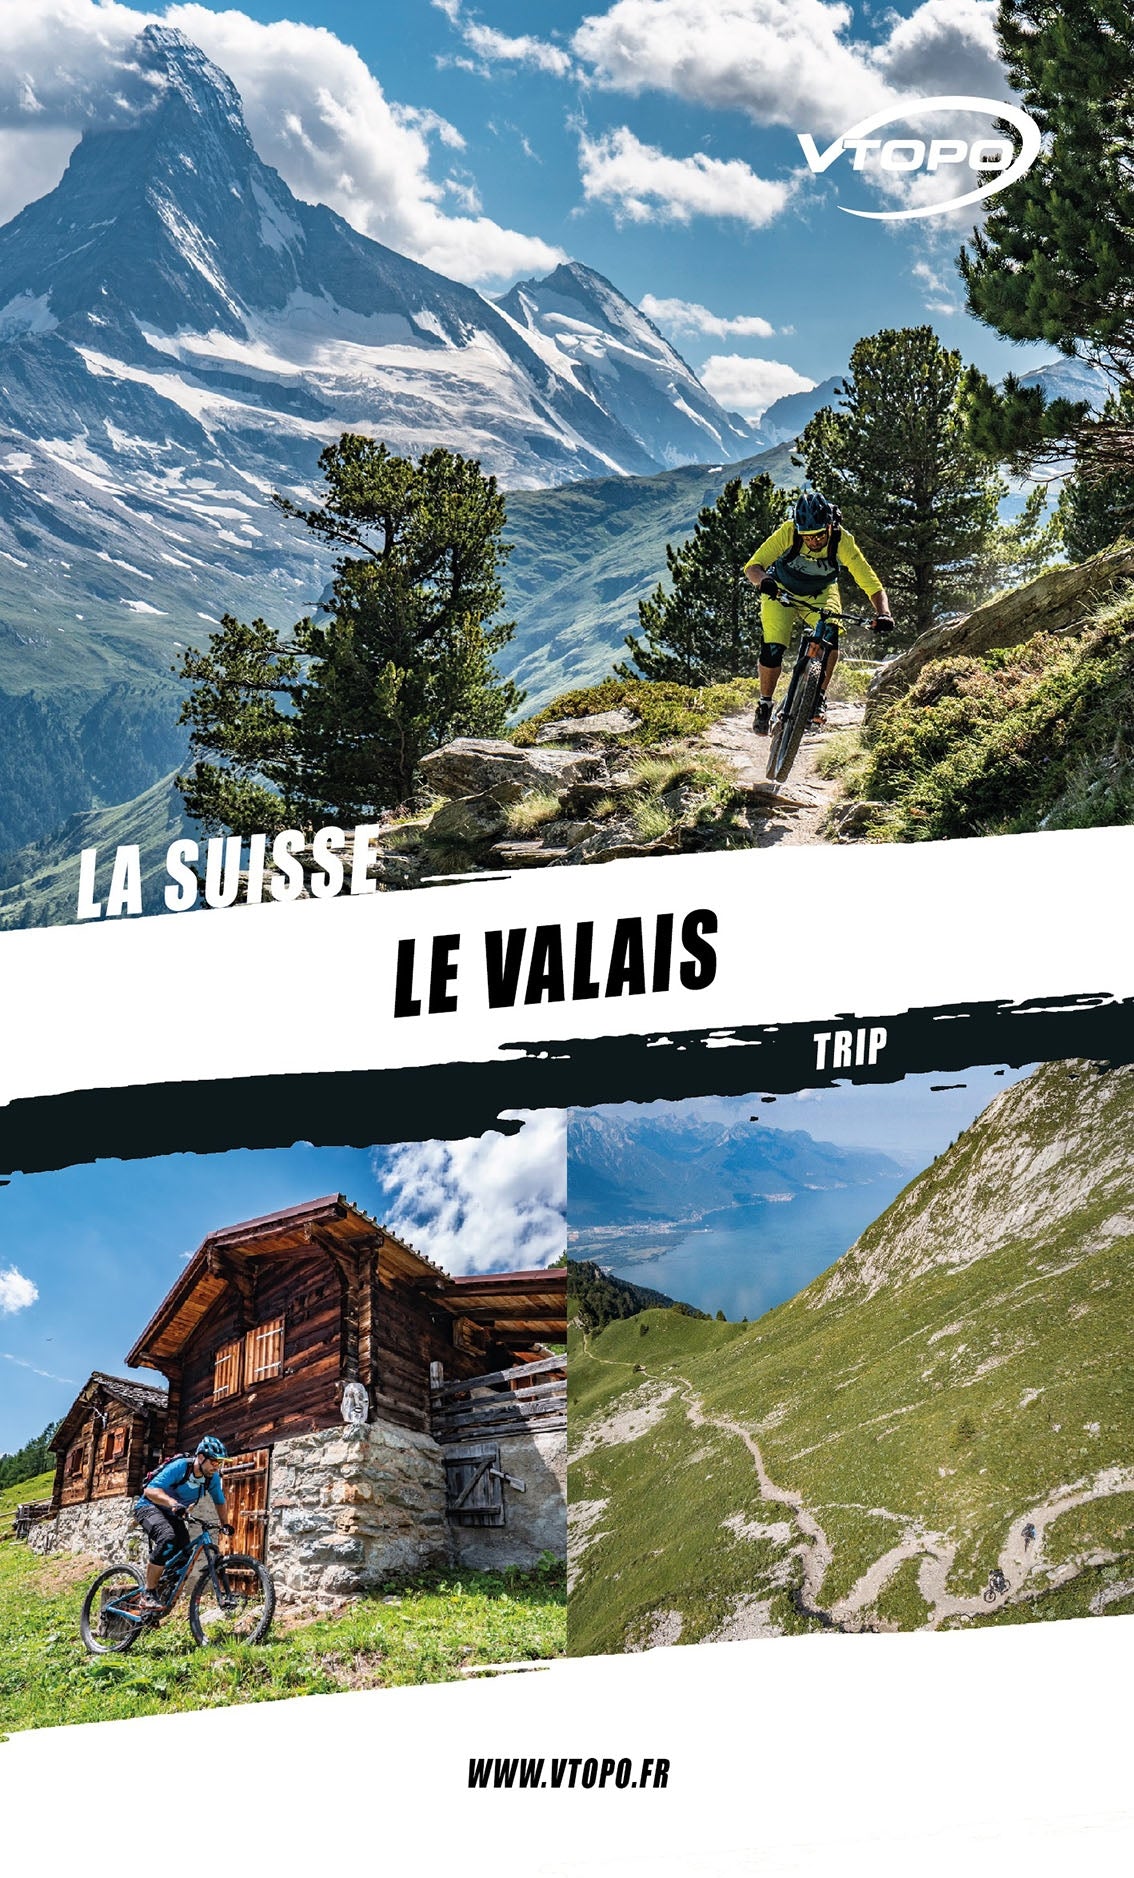 VTOPO MTB Trip Switzerland Valais - Digital Book